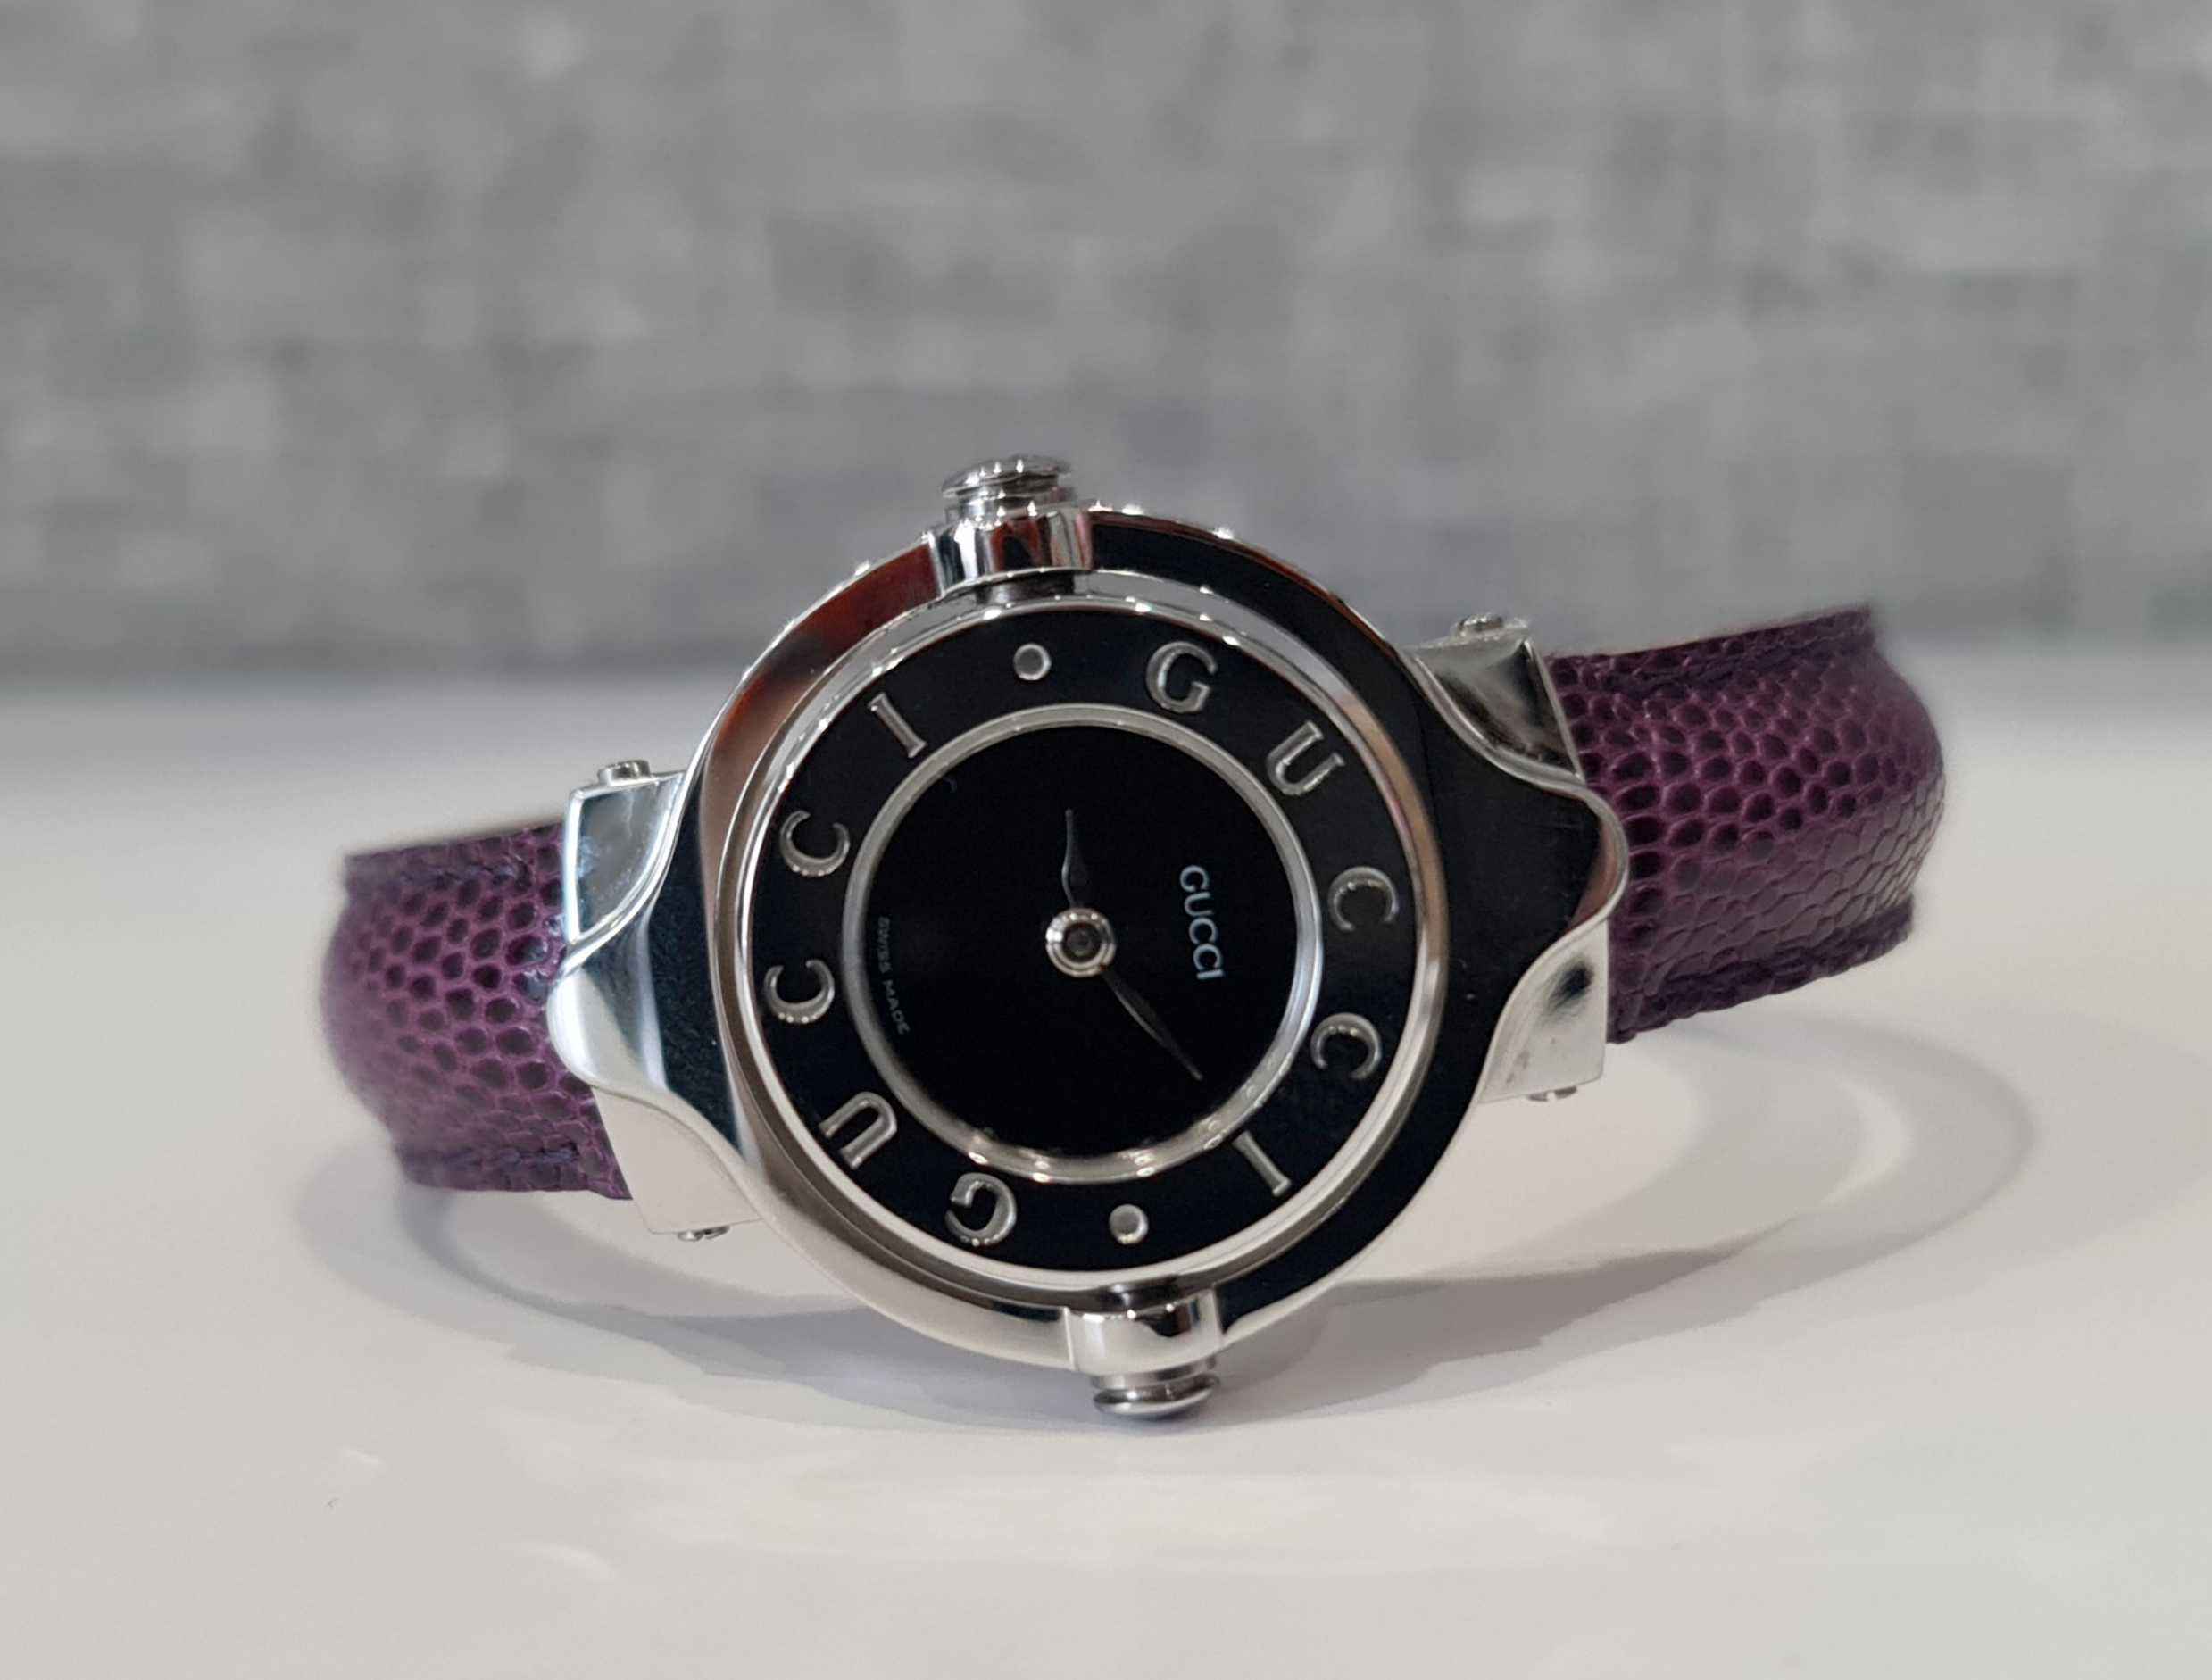 Жіночий годинник Gucci Swiss Made Sapphire